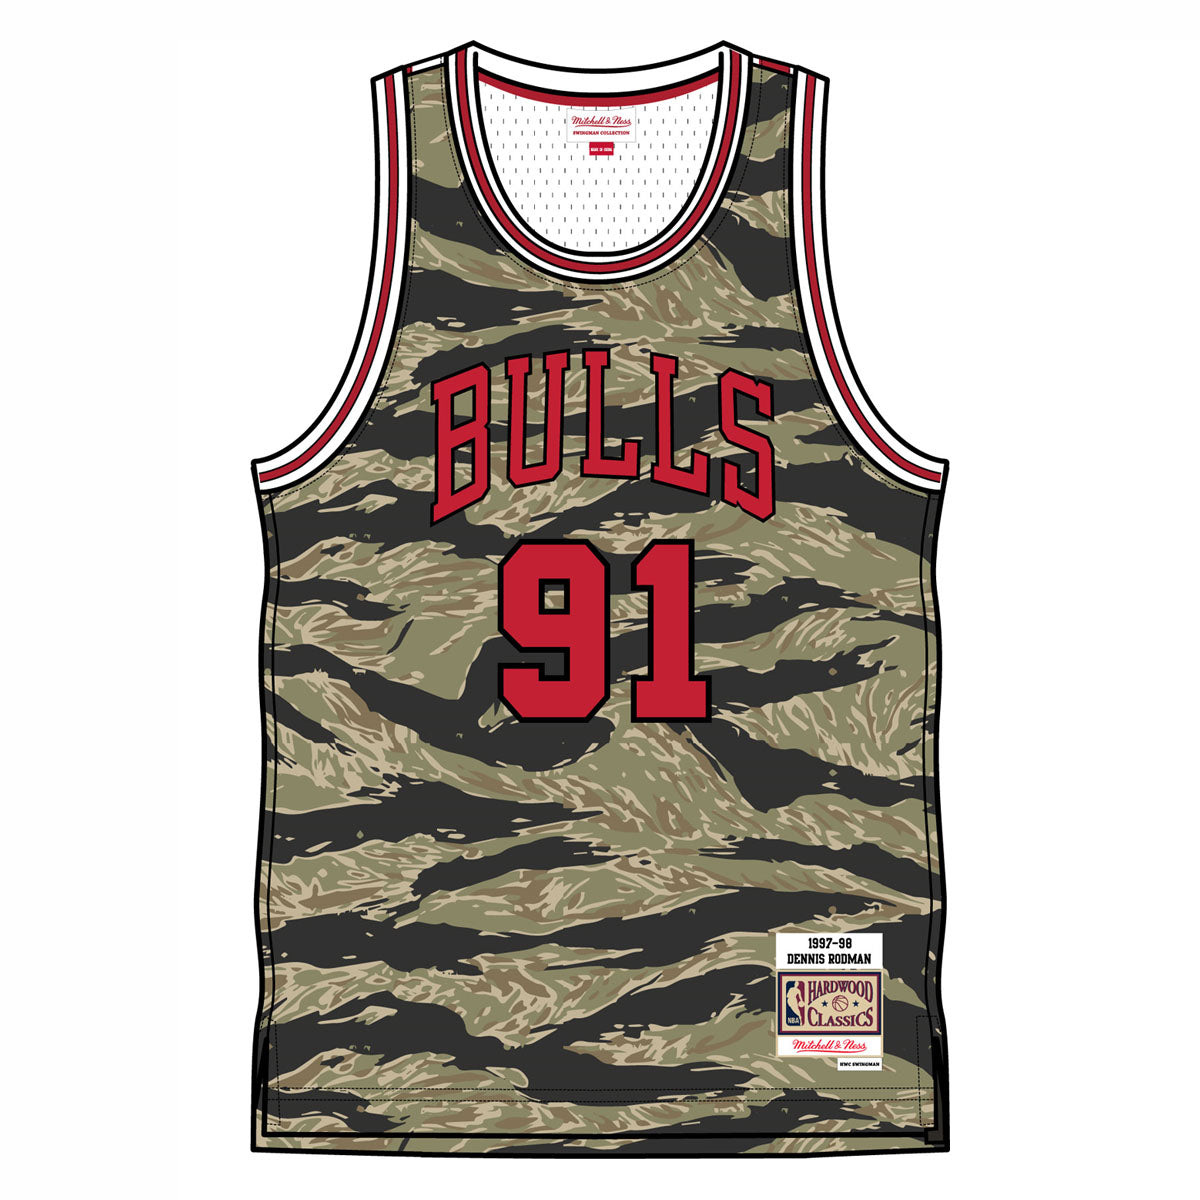 Adidas Dennis Rodman 91 NBA Bulls Jersey Size S